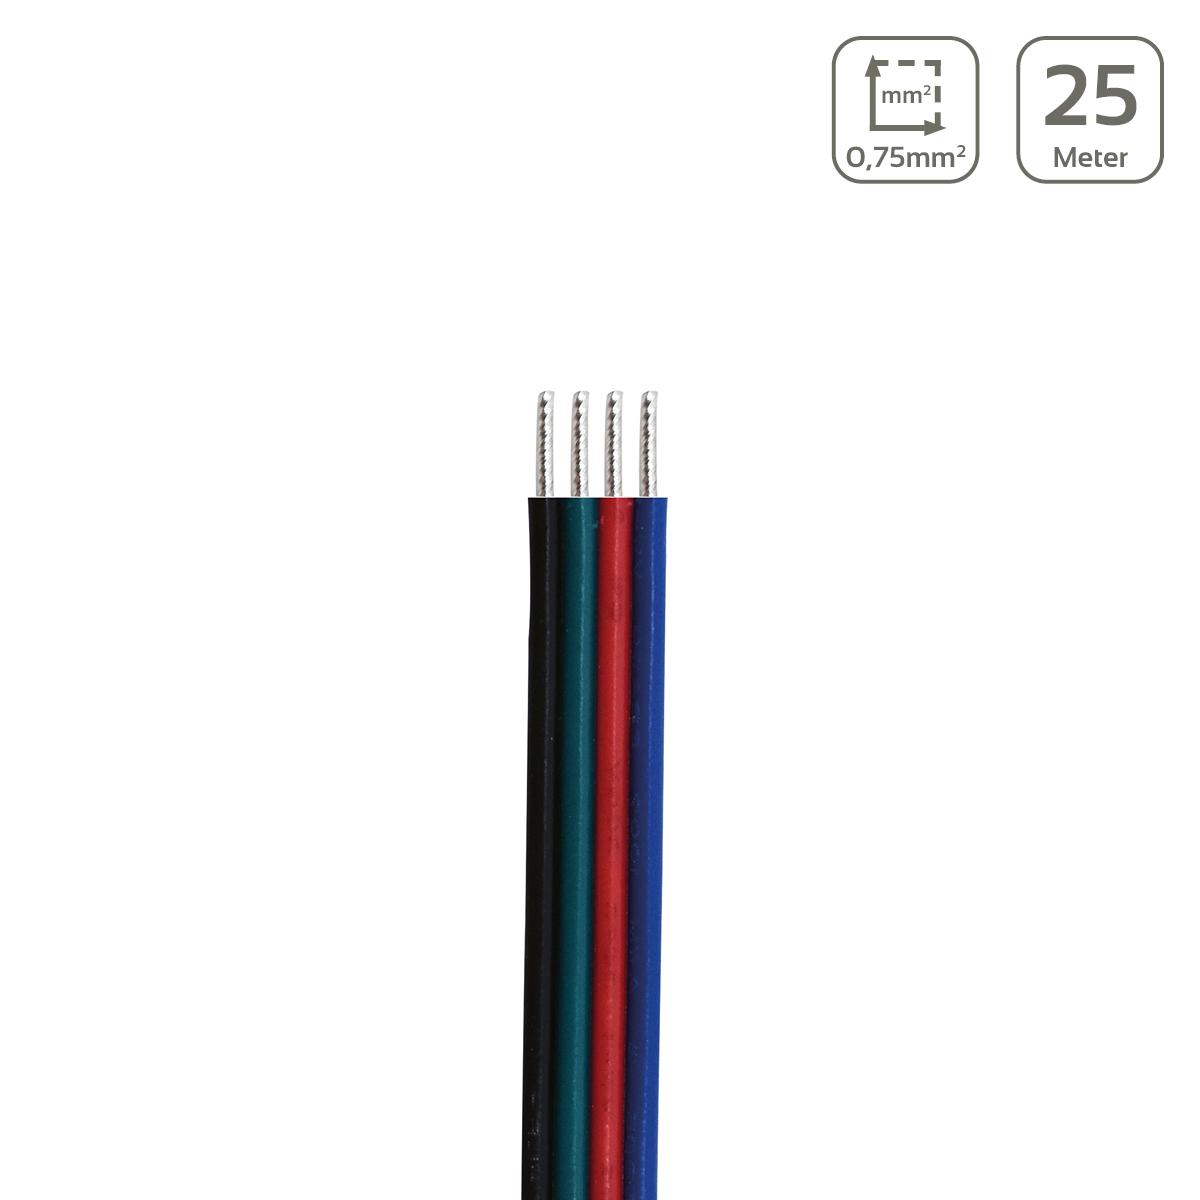 LED Kabel RGB 4-polig - Querschnitt: 4x0,75mm² / AWG18 - Länge: 25m